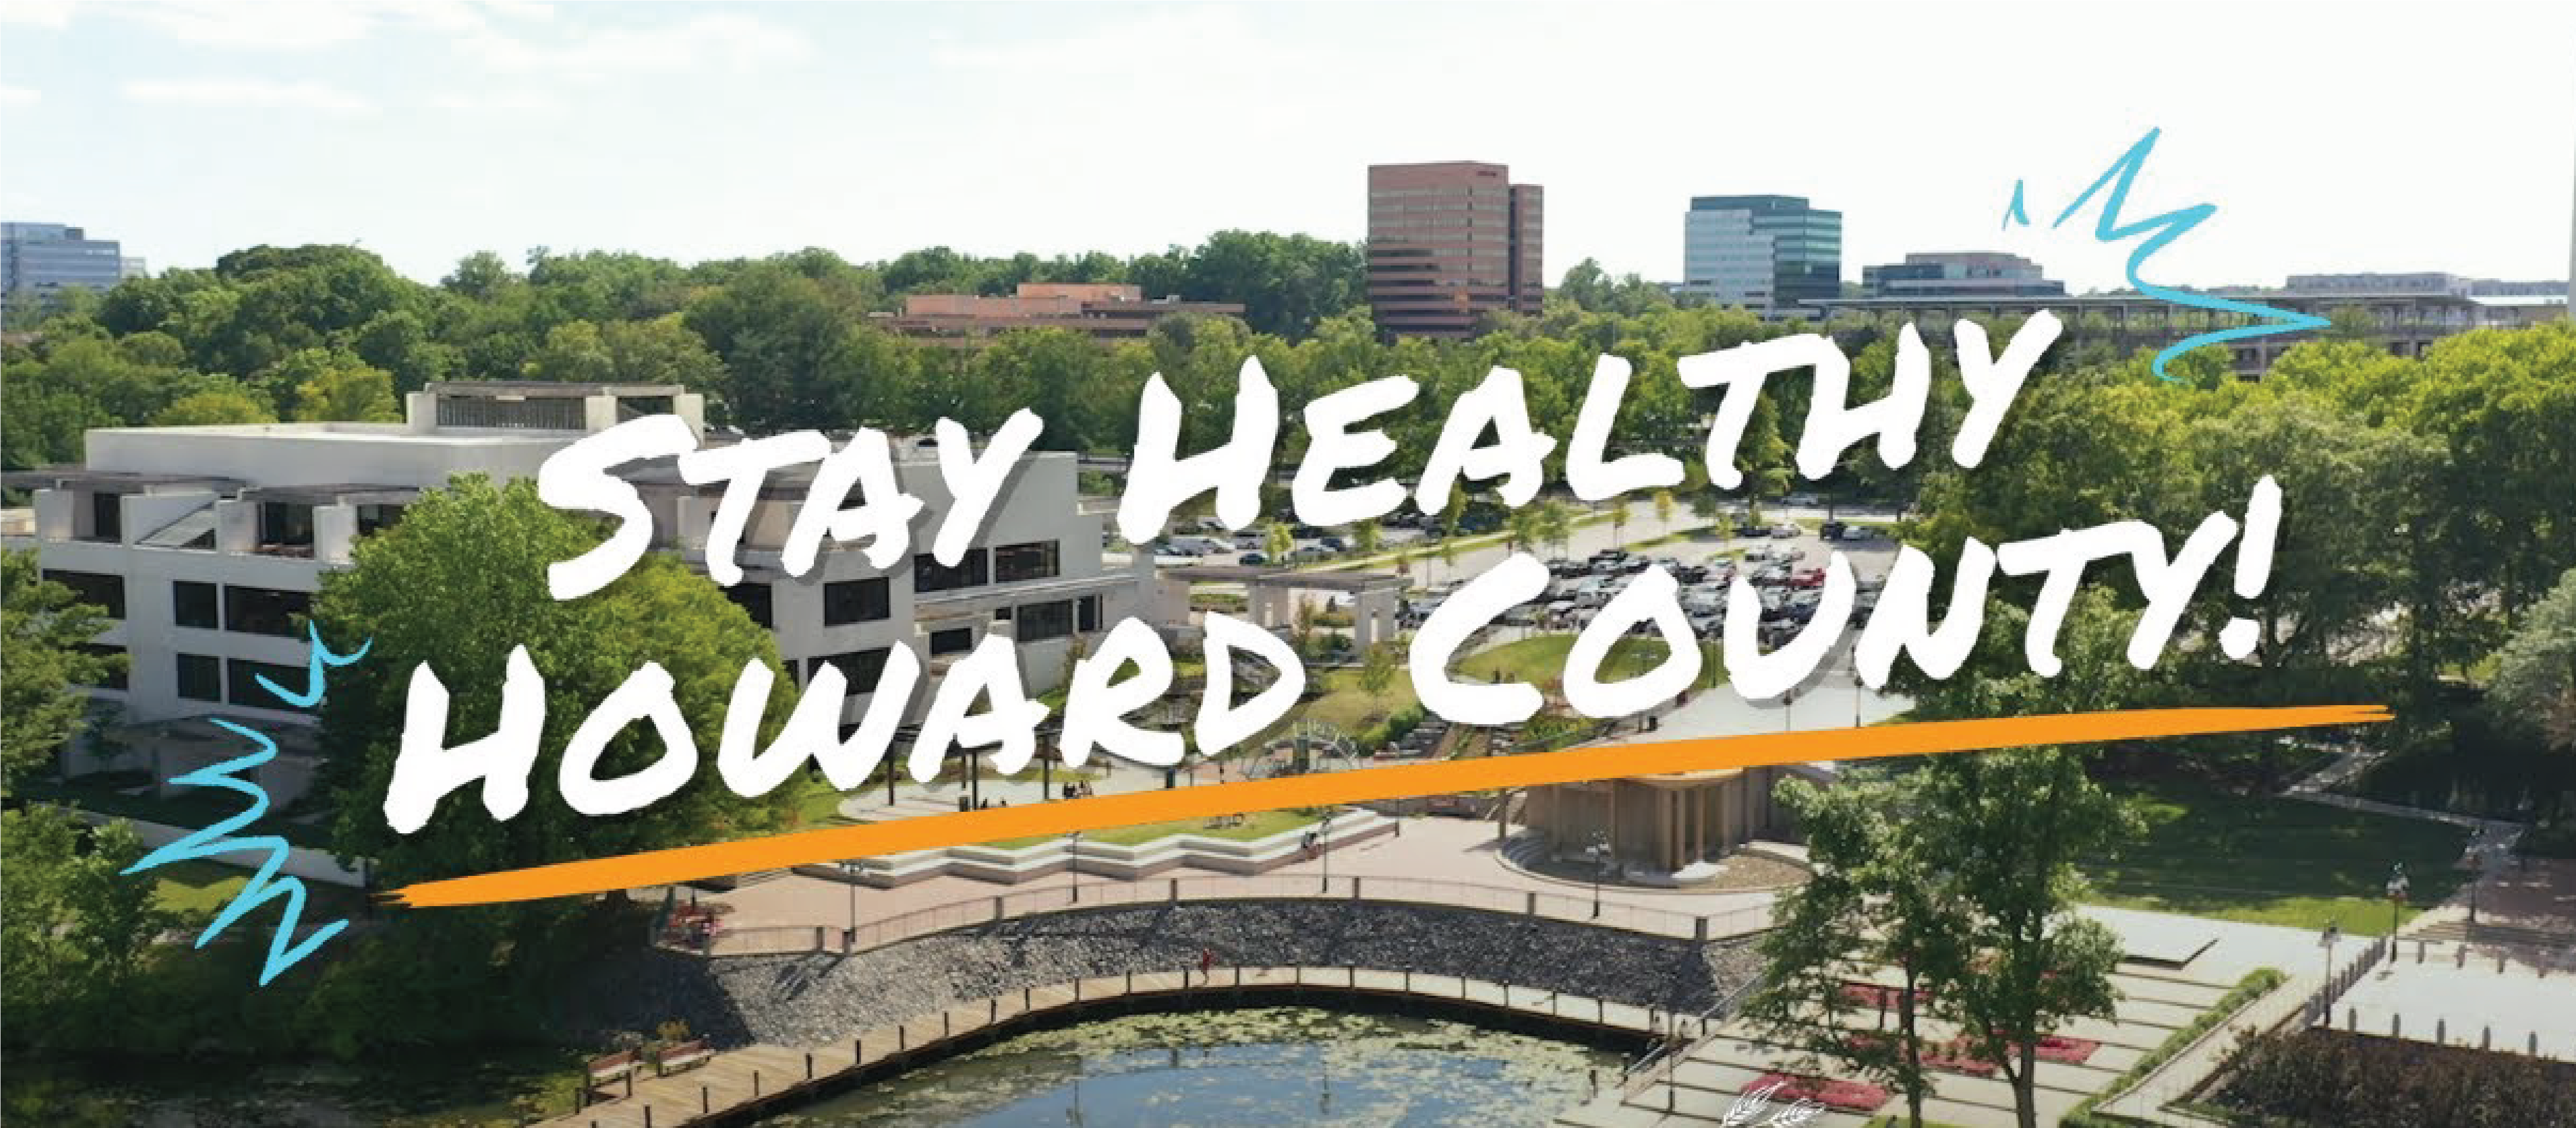 Stay Healthy Howard County